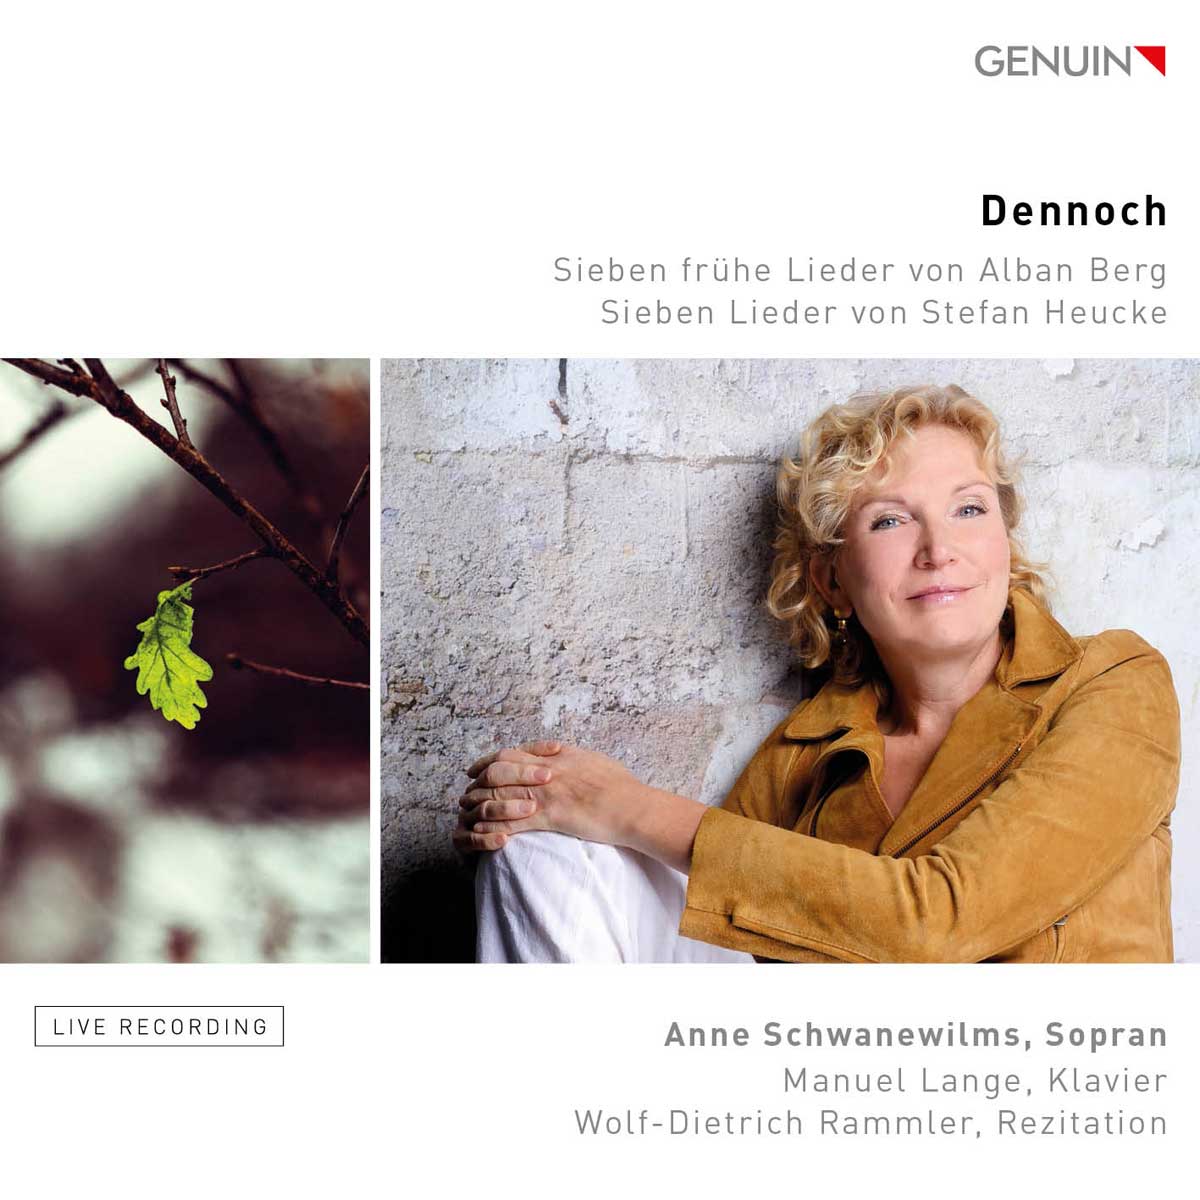 CD album cover 'Dennoch' (GEN 23808) with Anne Schwanewilms, Manuel Lange, Wolf-Dietrich Rammler, Stefan Heucke